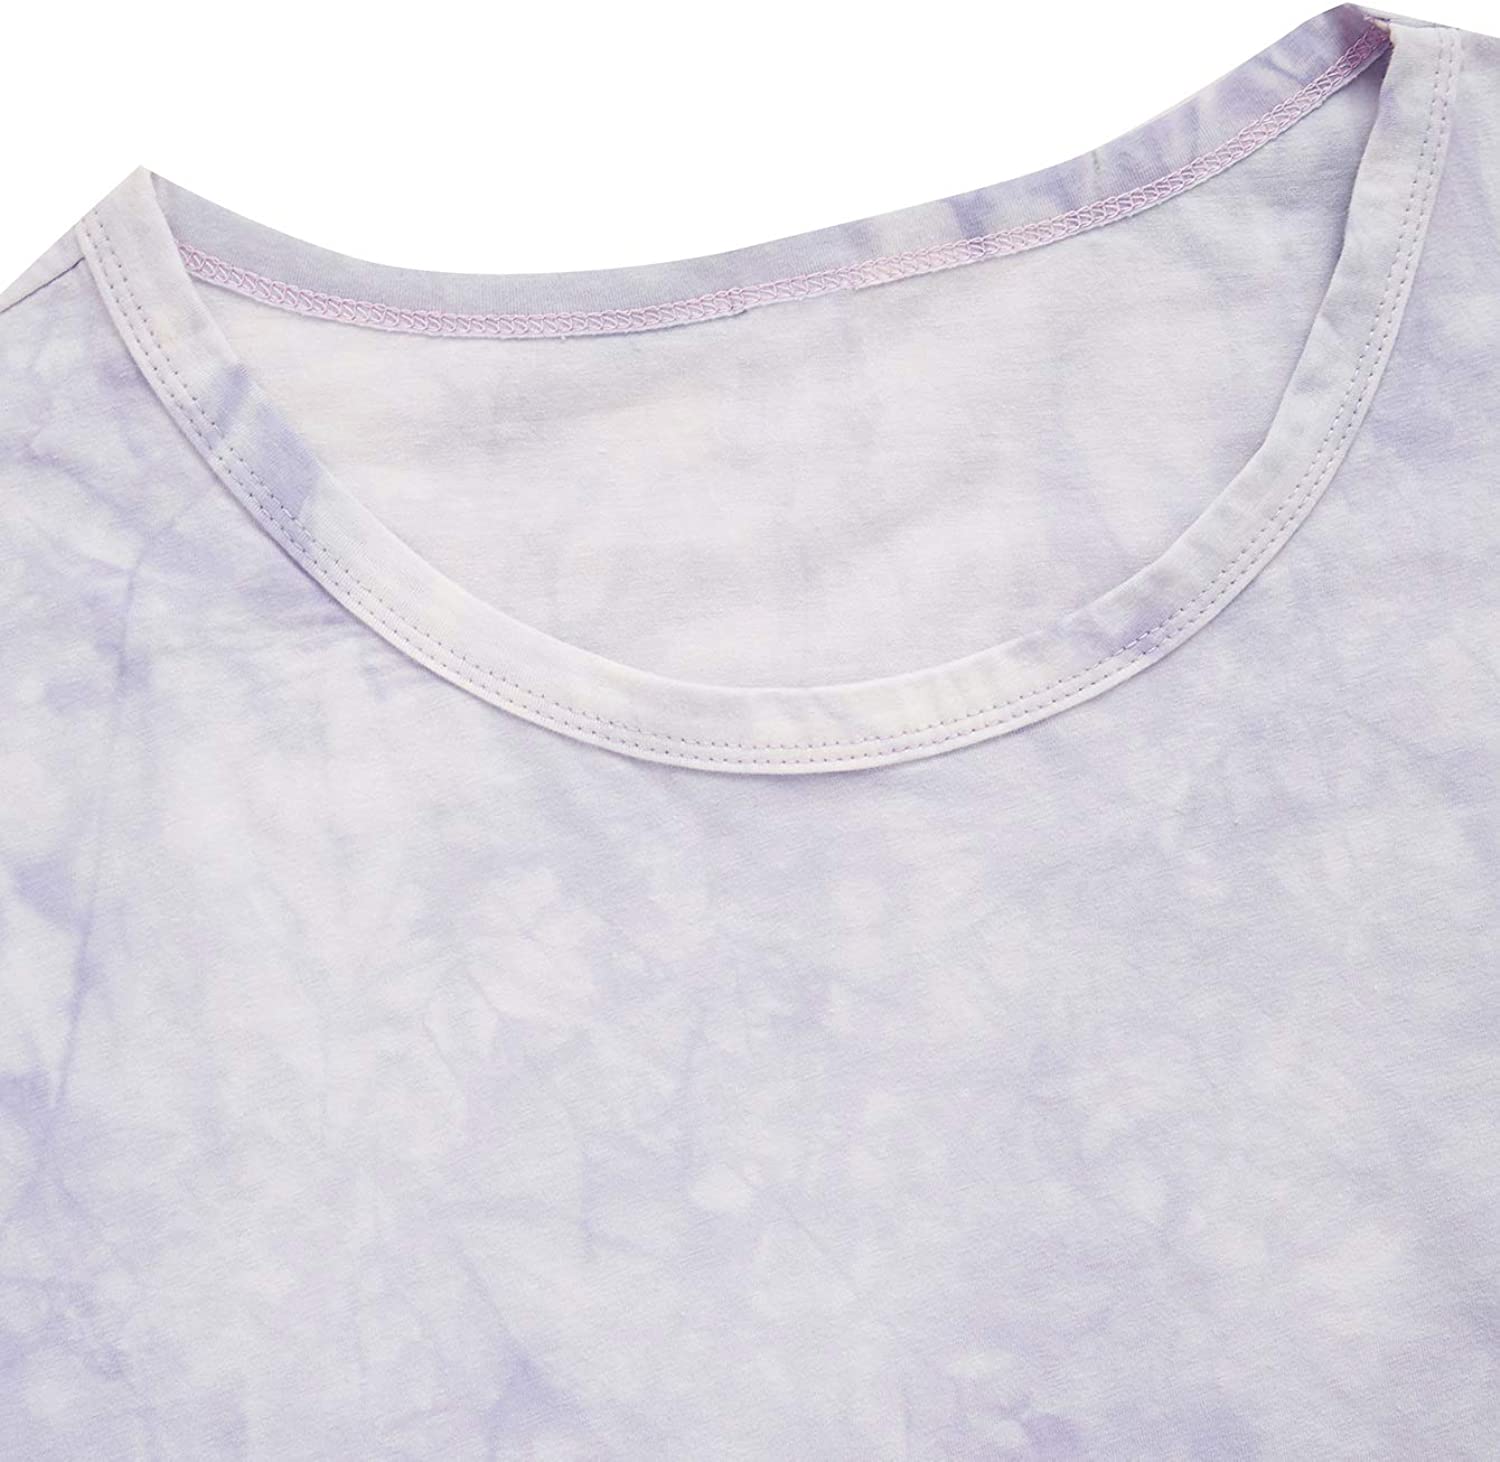 SweatyRocks Women's Round Neck Short Sleeve Casual Tie Dye Crop Top T-Shirt